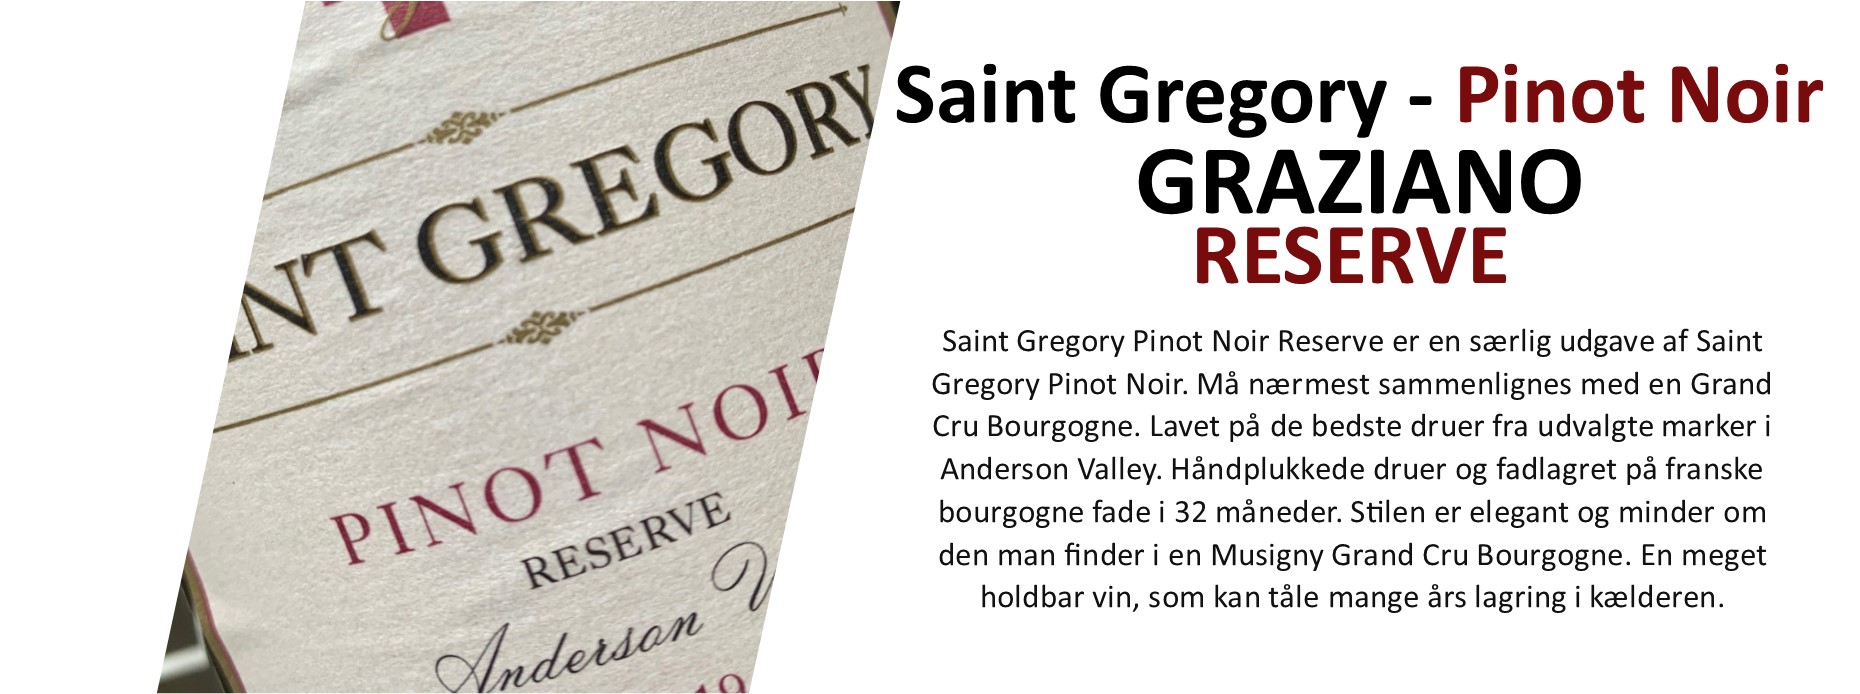 Saint Gregory Pinot Noir Reserve Graziano banner